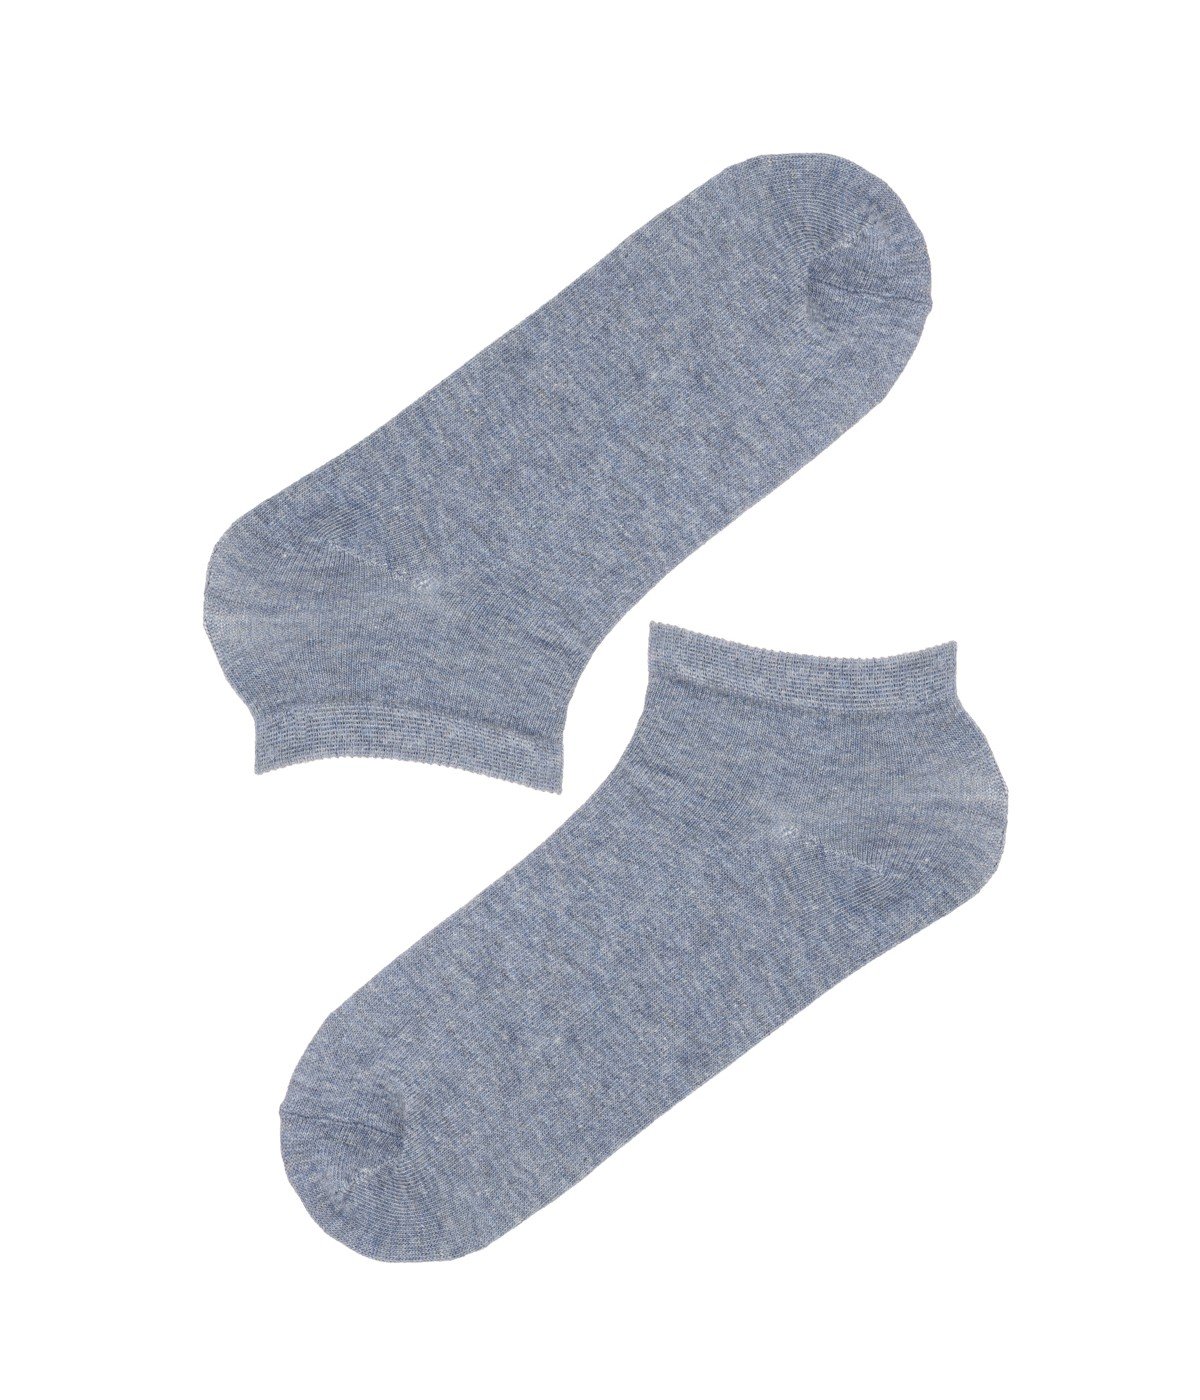 Ciorapi tip talpici Basic, 4 perechi